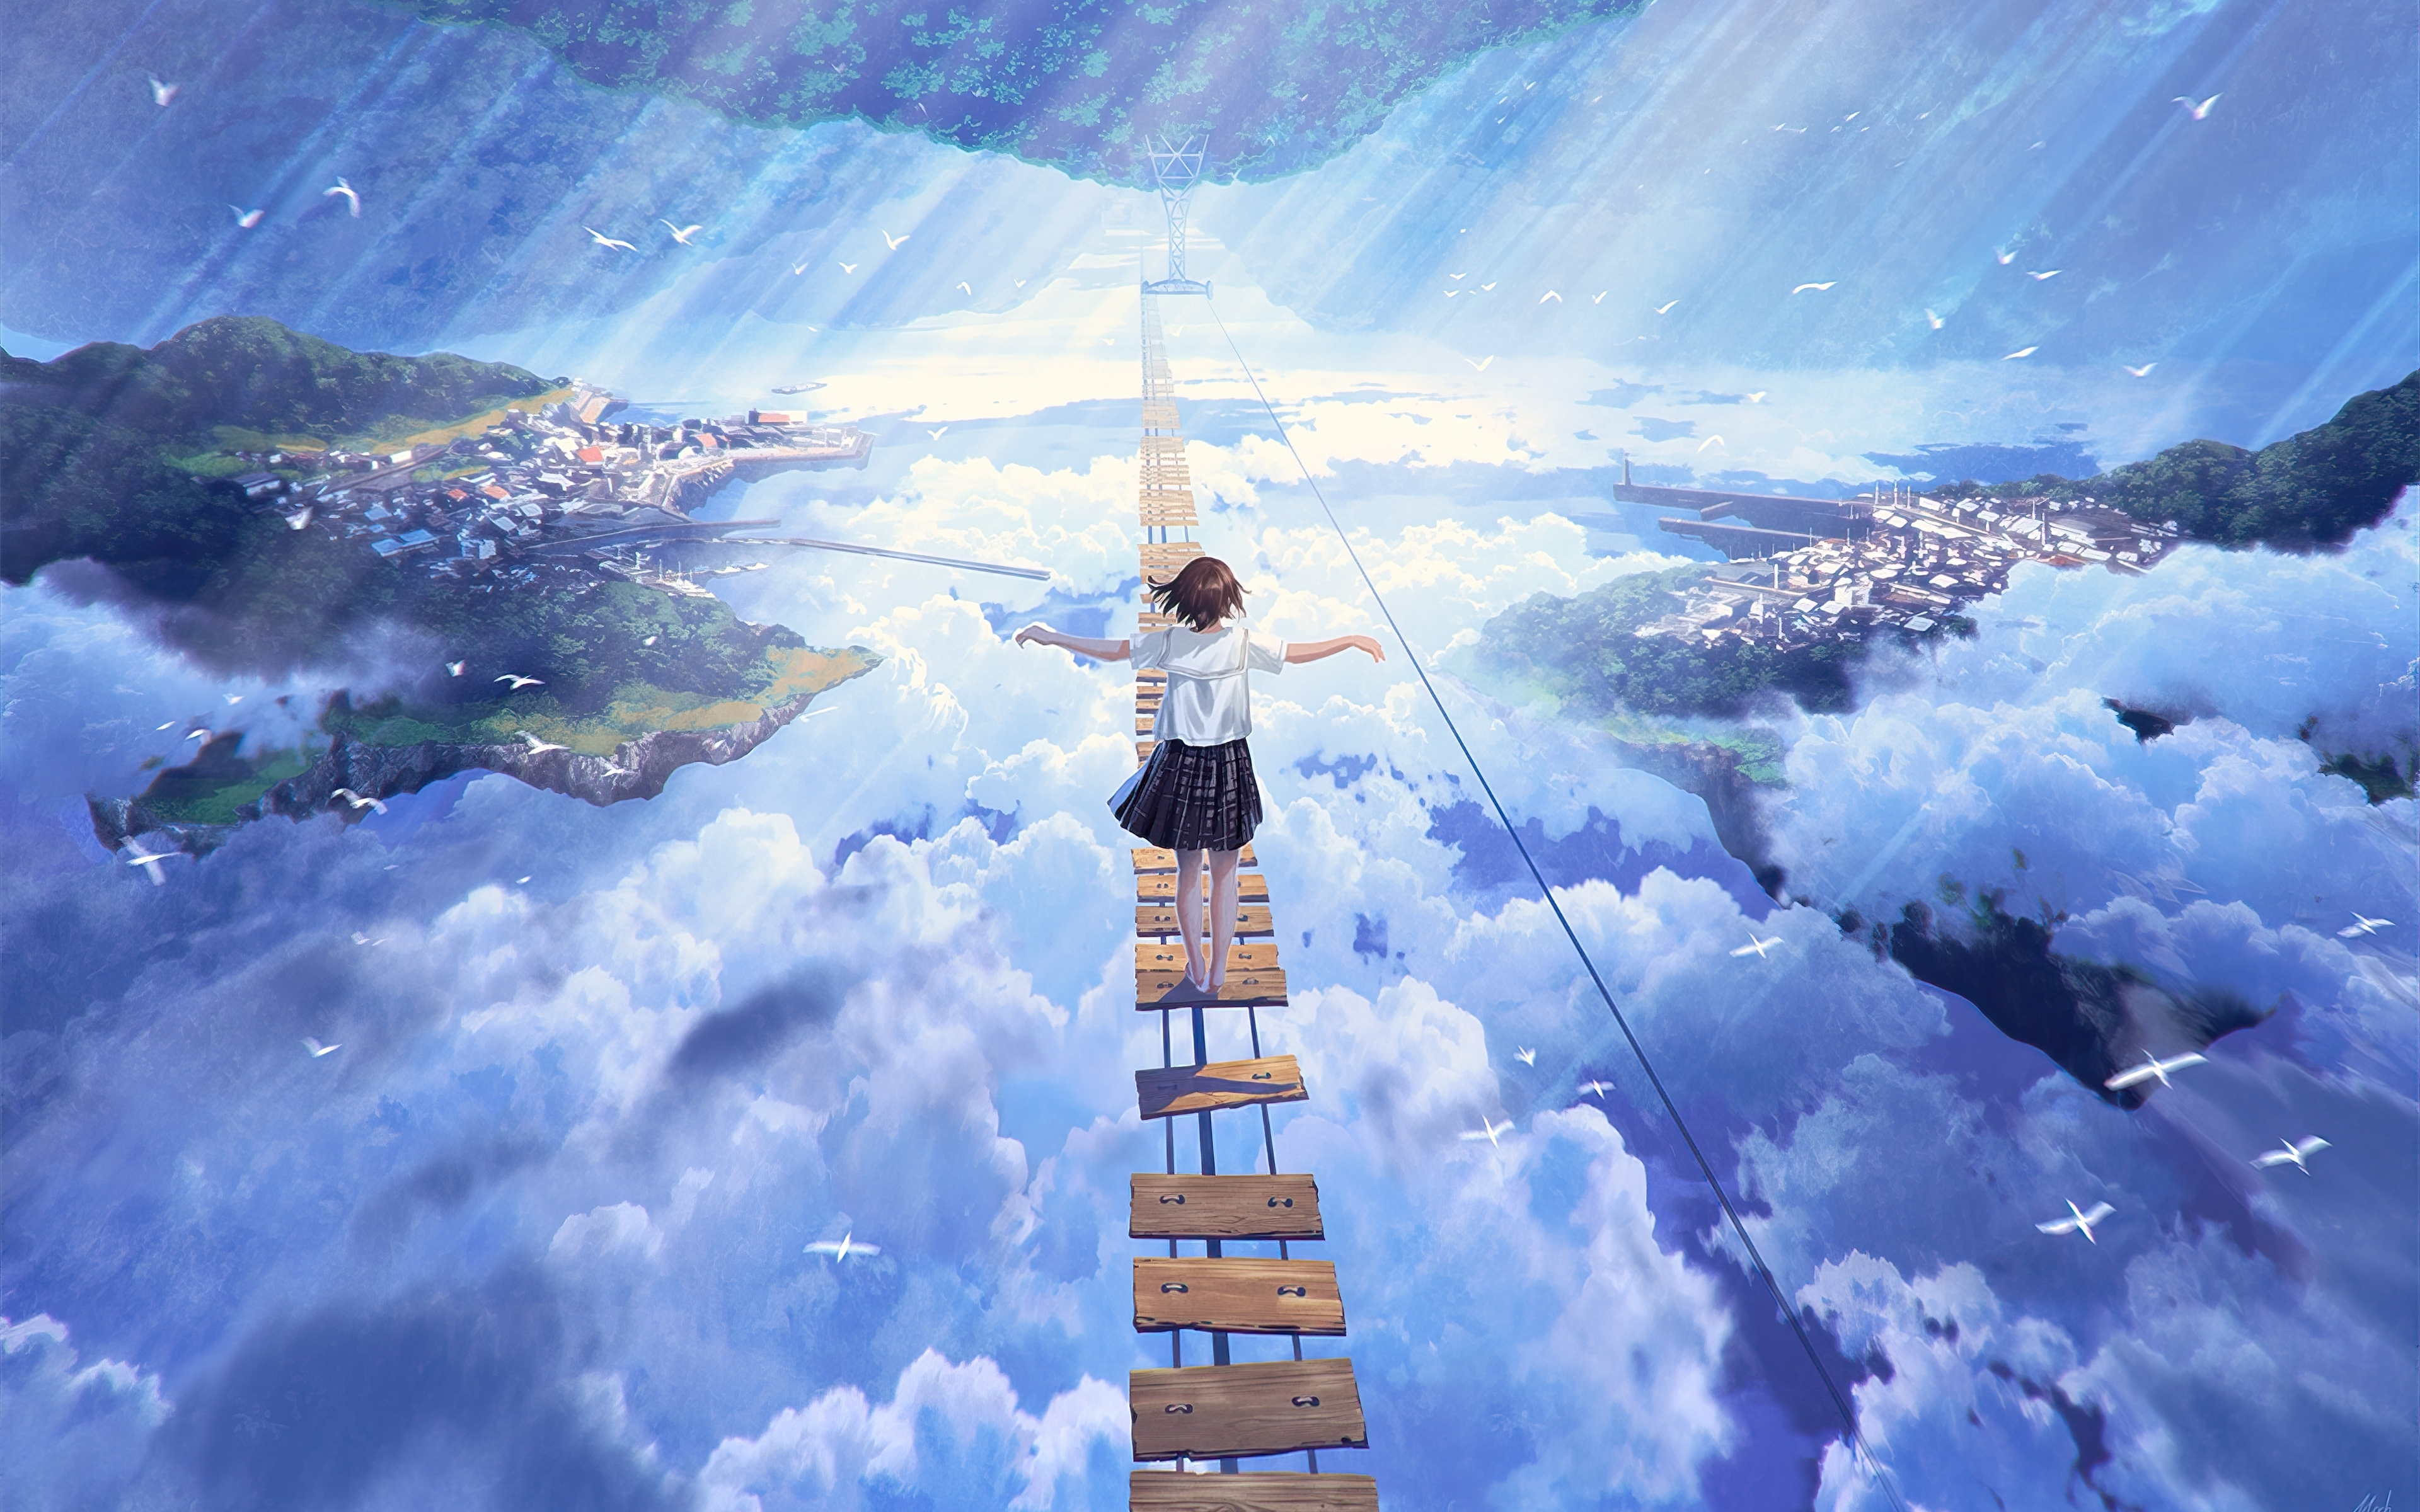 Download wallpaper 3840x2400 anime girl walking on dream bridge, clouds,  artwork 4k wallaper, 4k ultra hd 16:10 wallpaper, 3840x2400 hd background,  26554